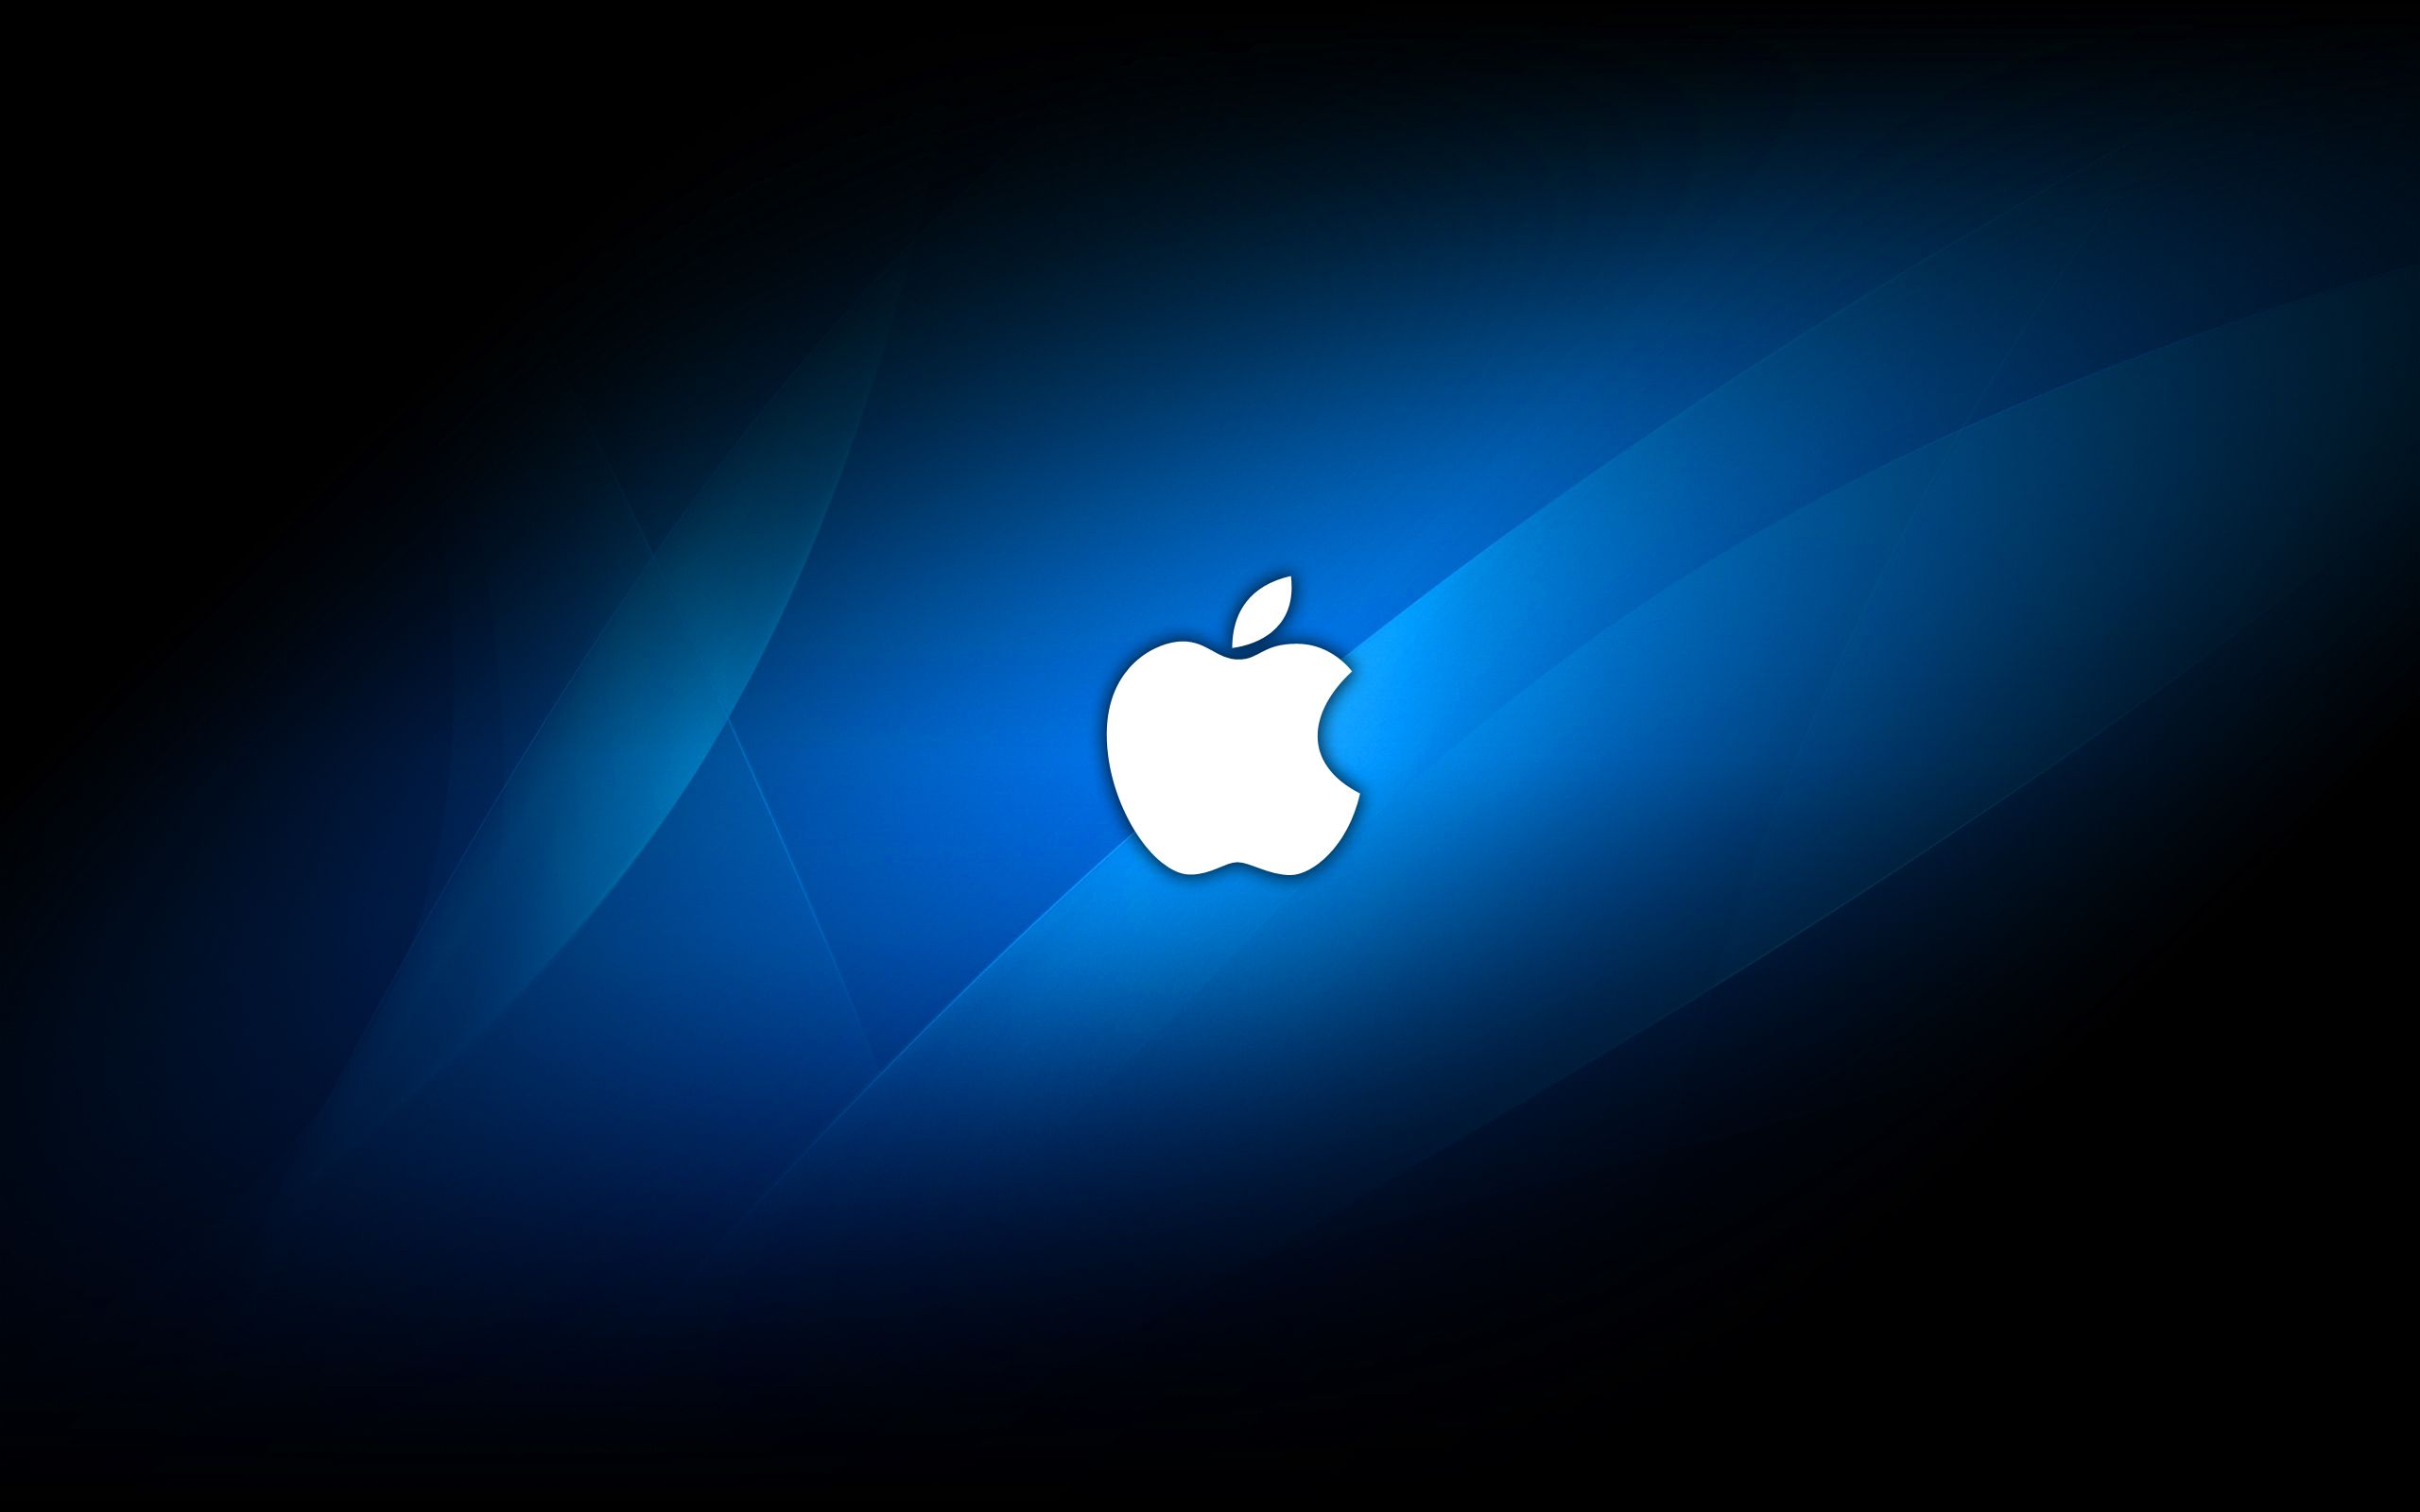 Papel De Parede Apple Mac Wallpaper Para No Celular Ou